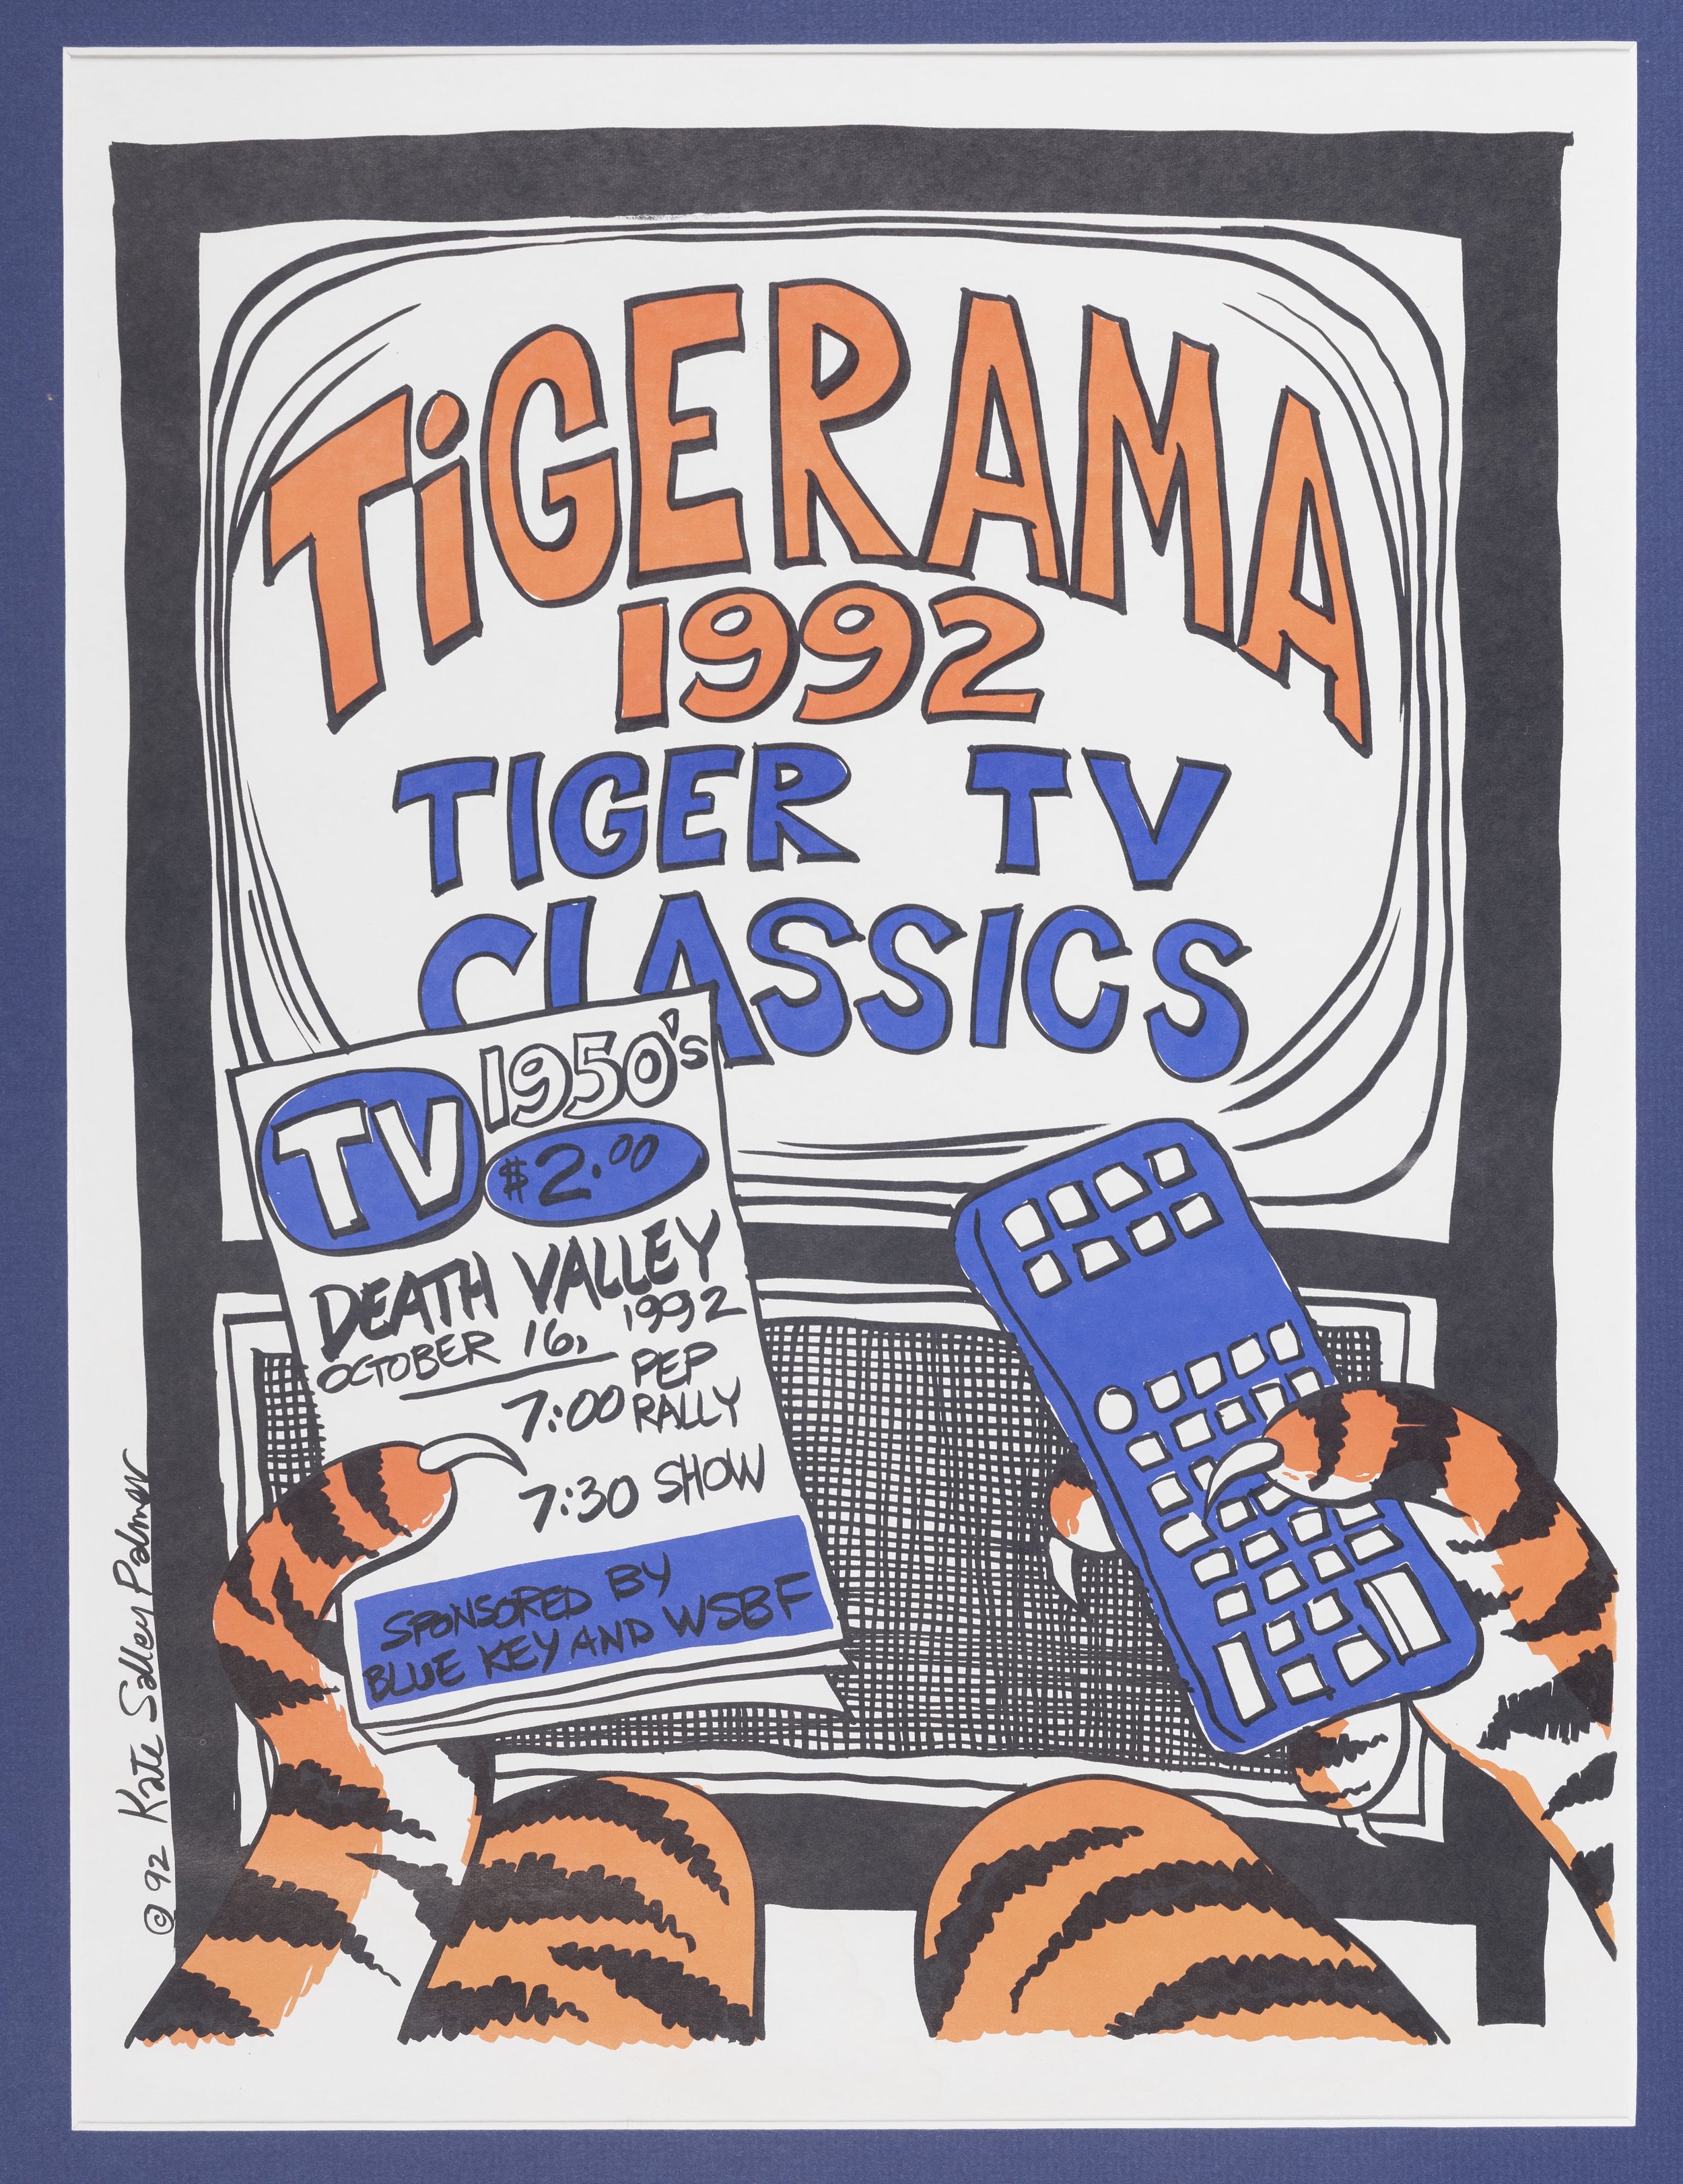 Tigerama 1992